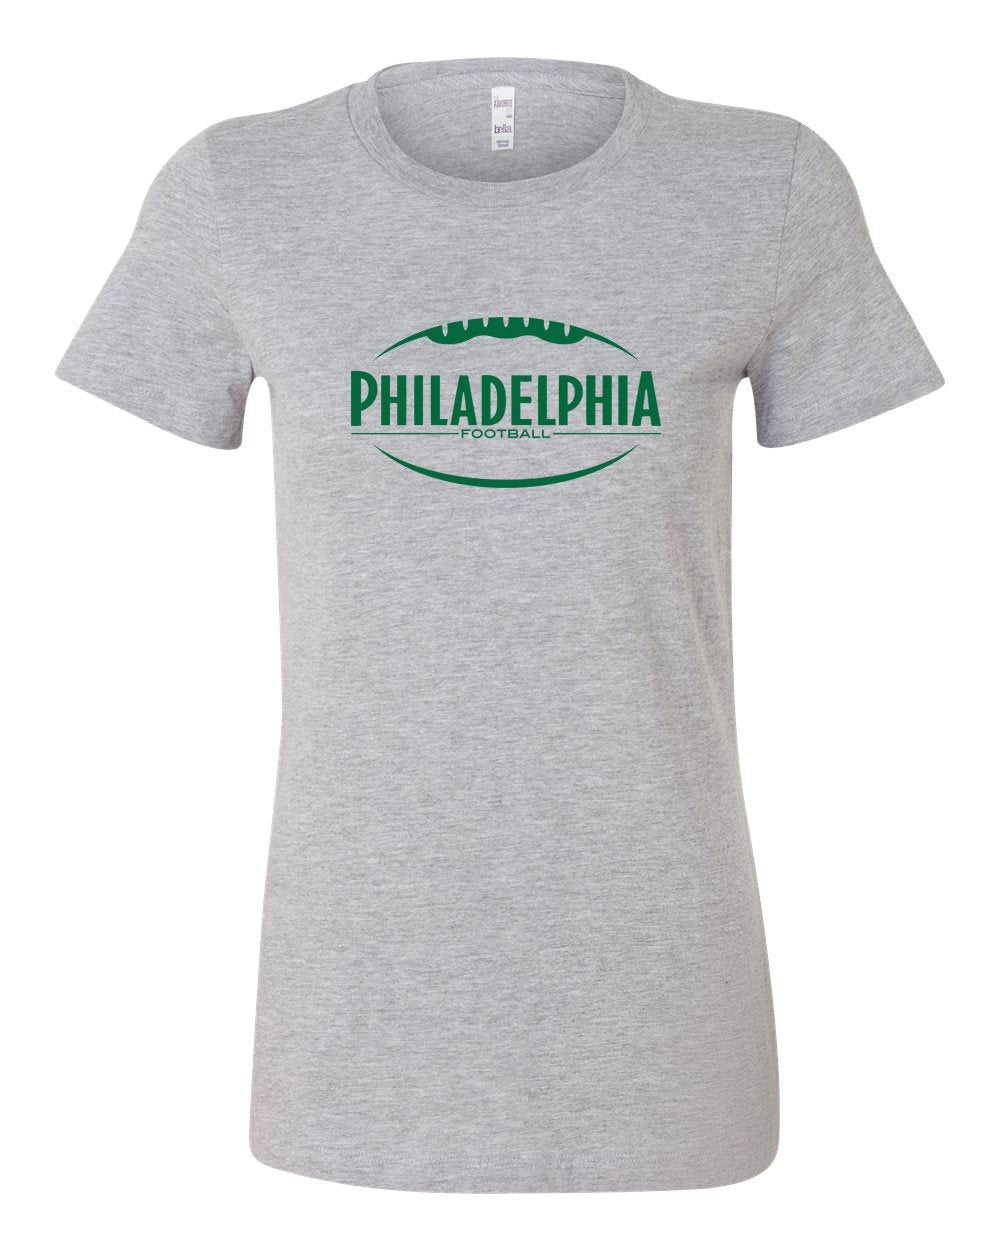 Philadelphia Football LADIES Junior-Fit T-Shirt